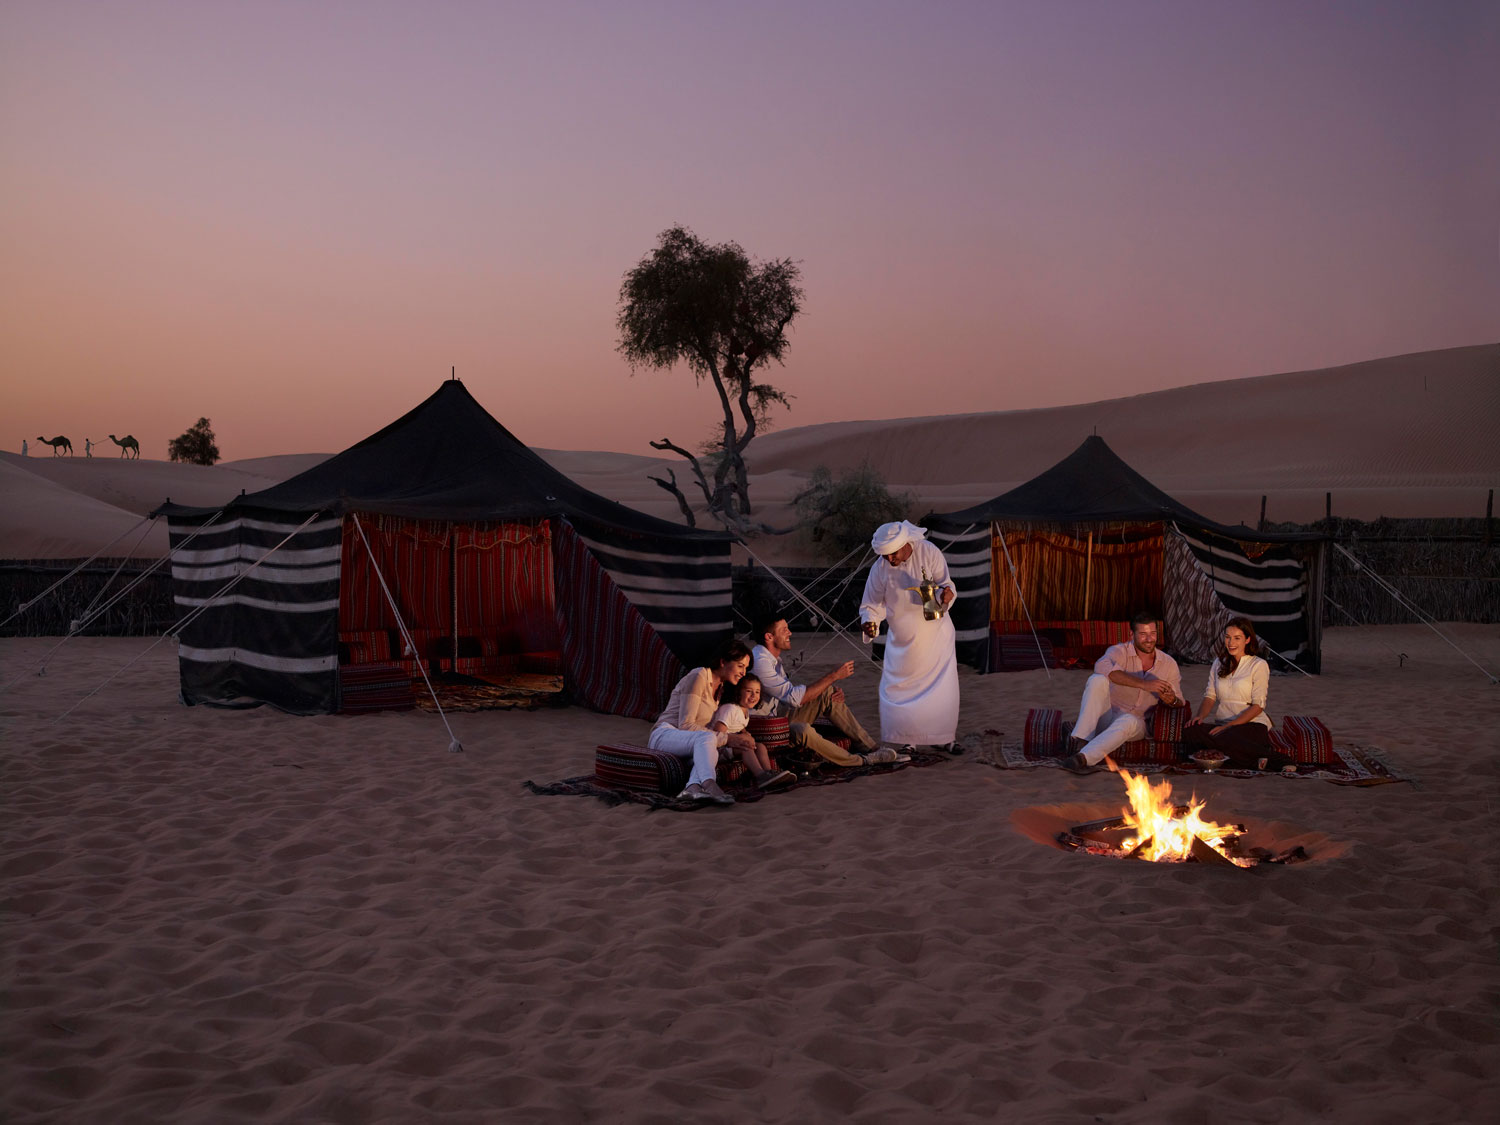 Explore Abu Dhabi's desert